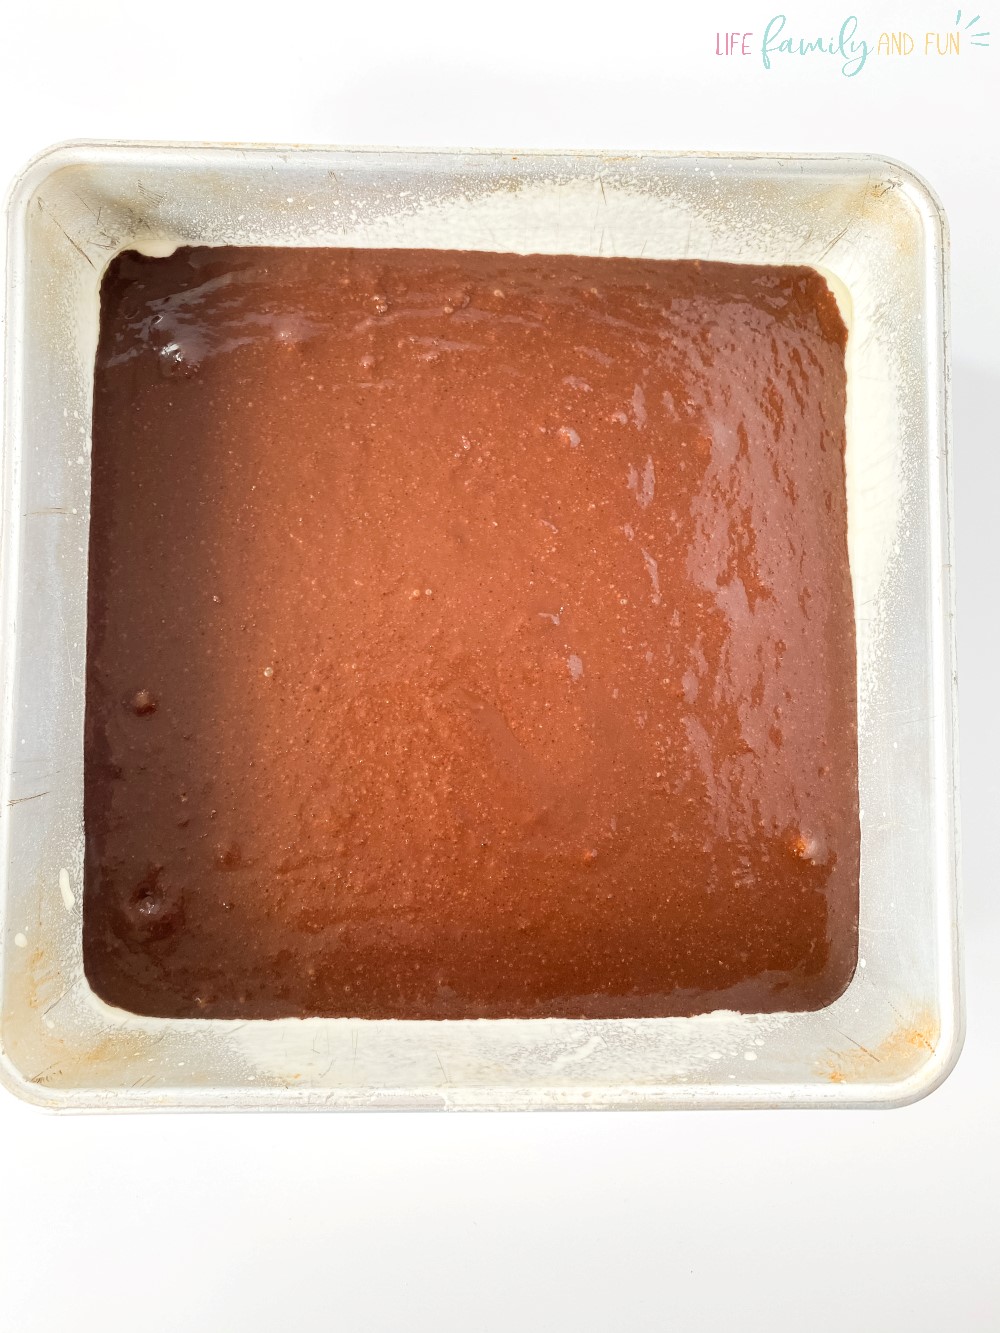 keto brownie recipe (6)